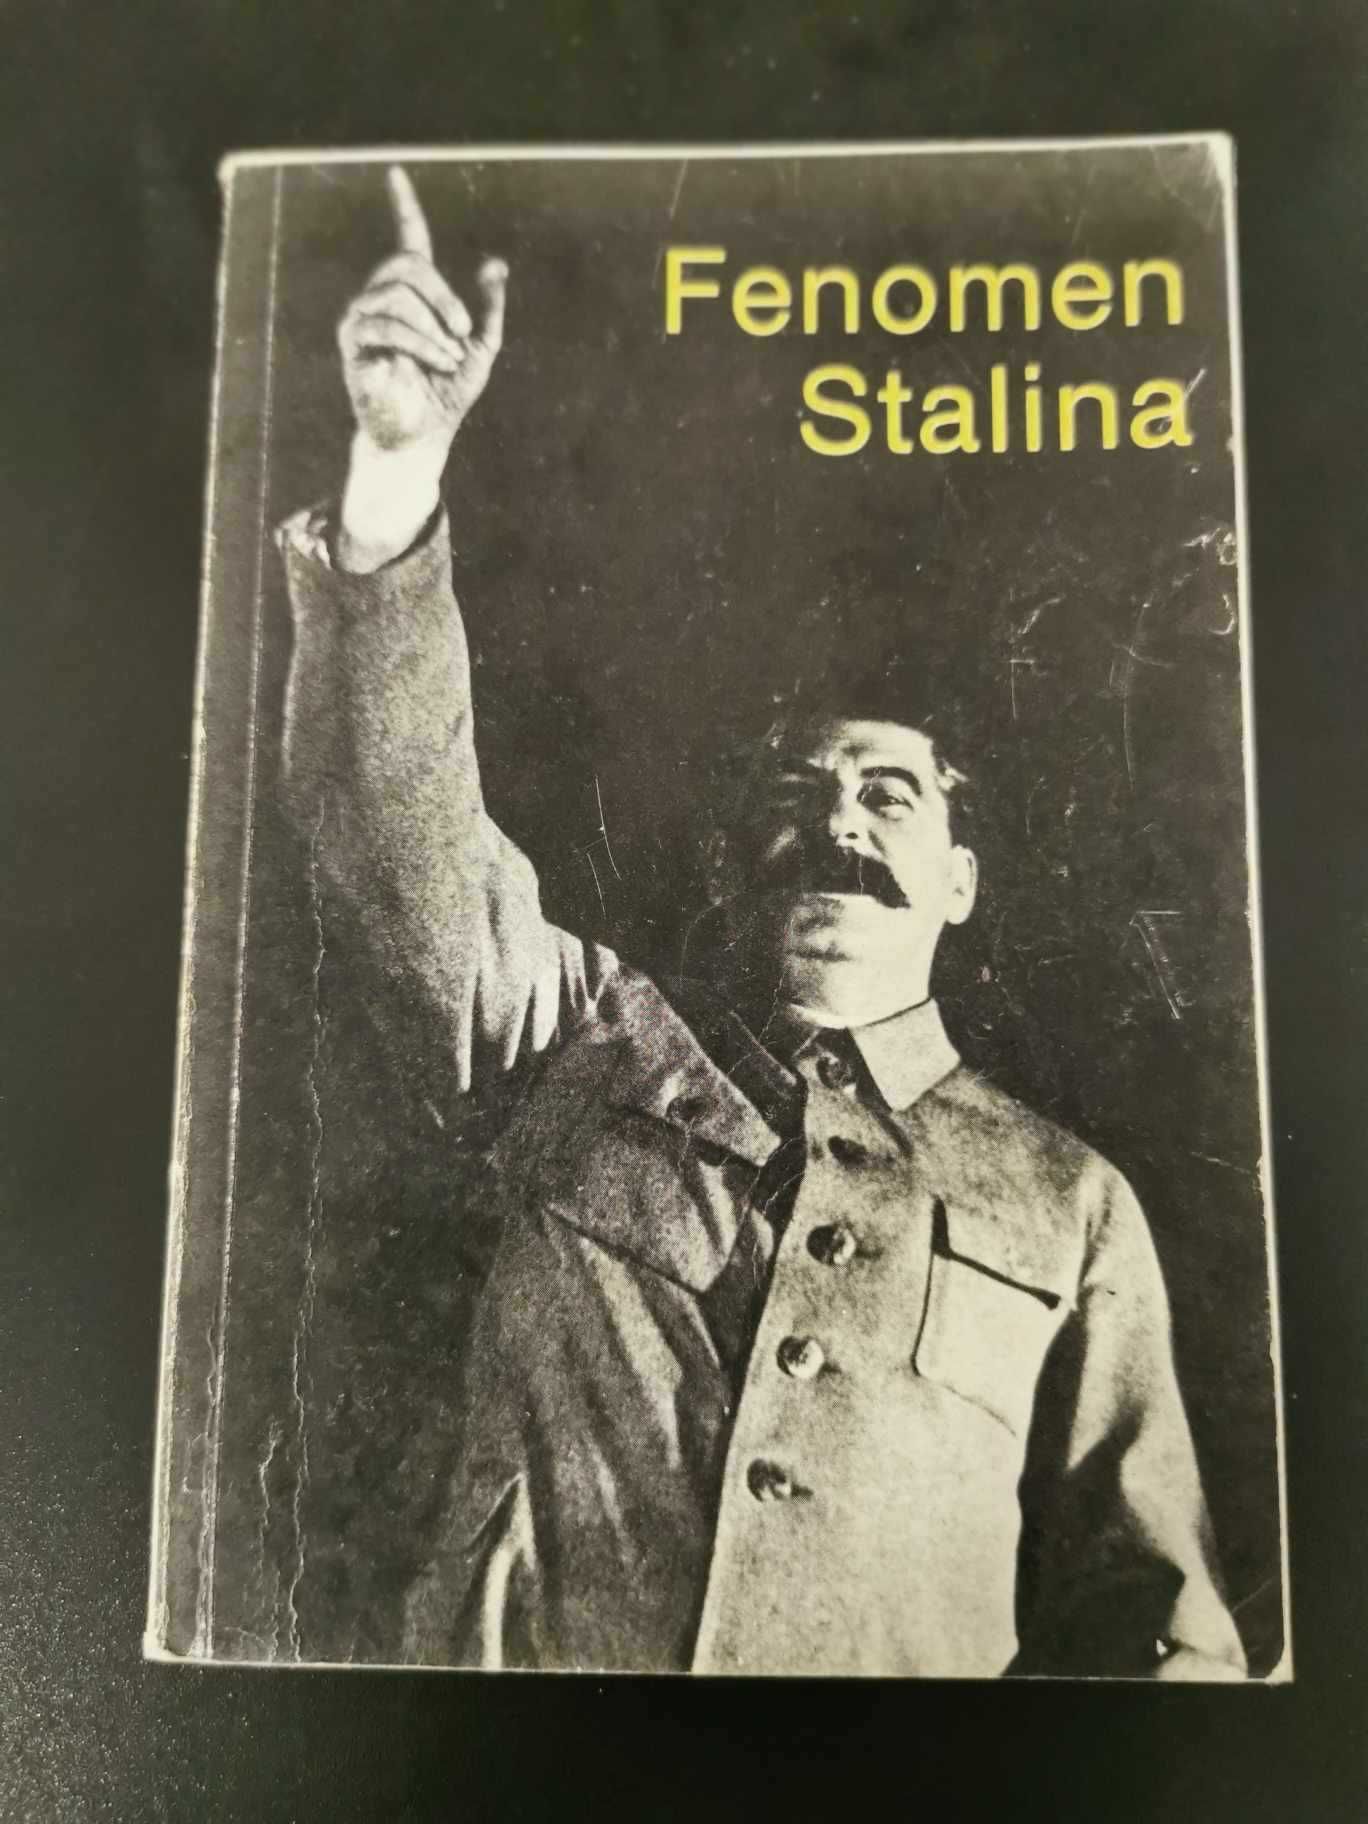 Fenomen Stalina praca zbiorowa